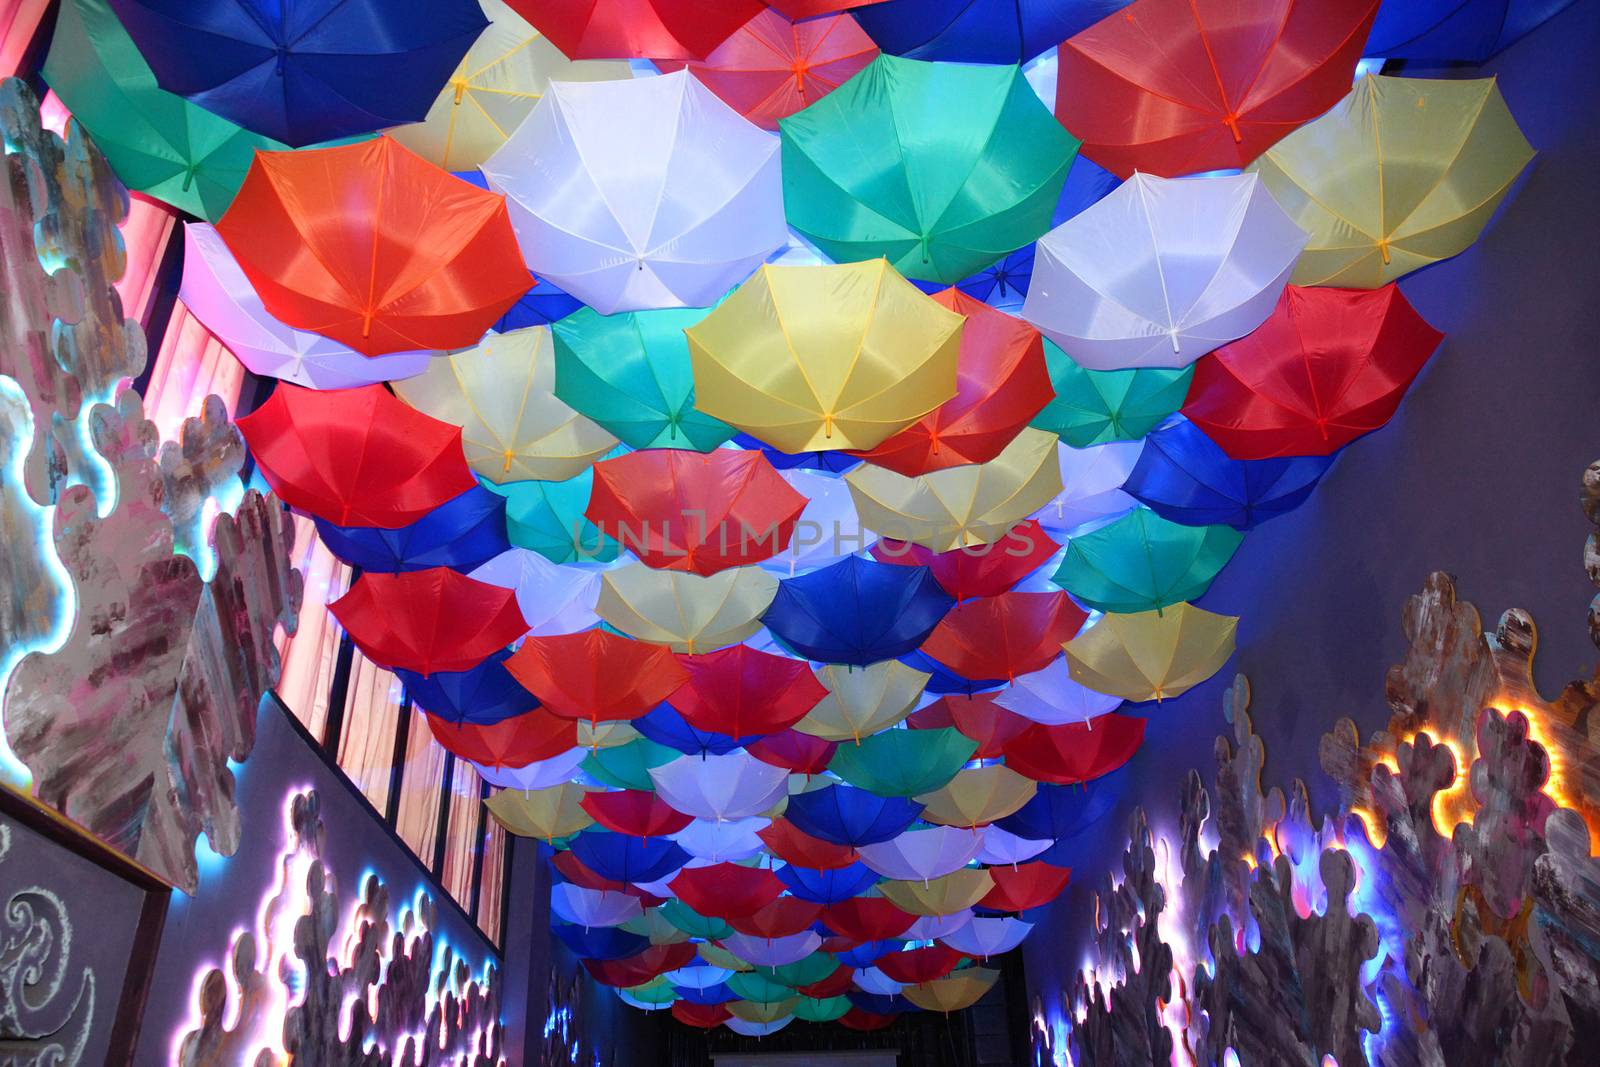 Background of colorful umbrellas